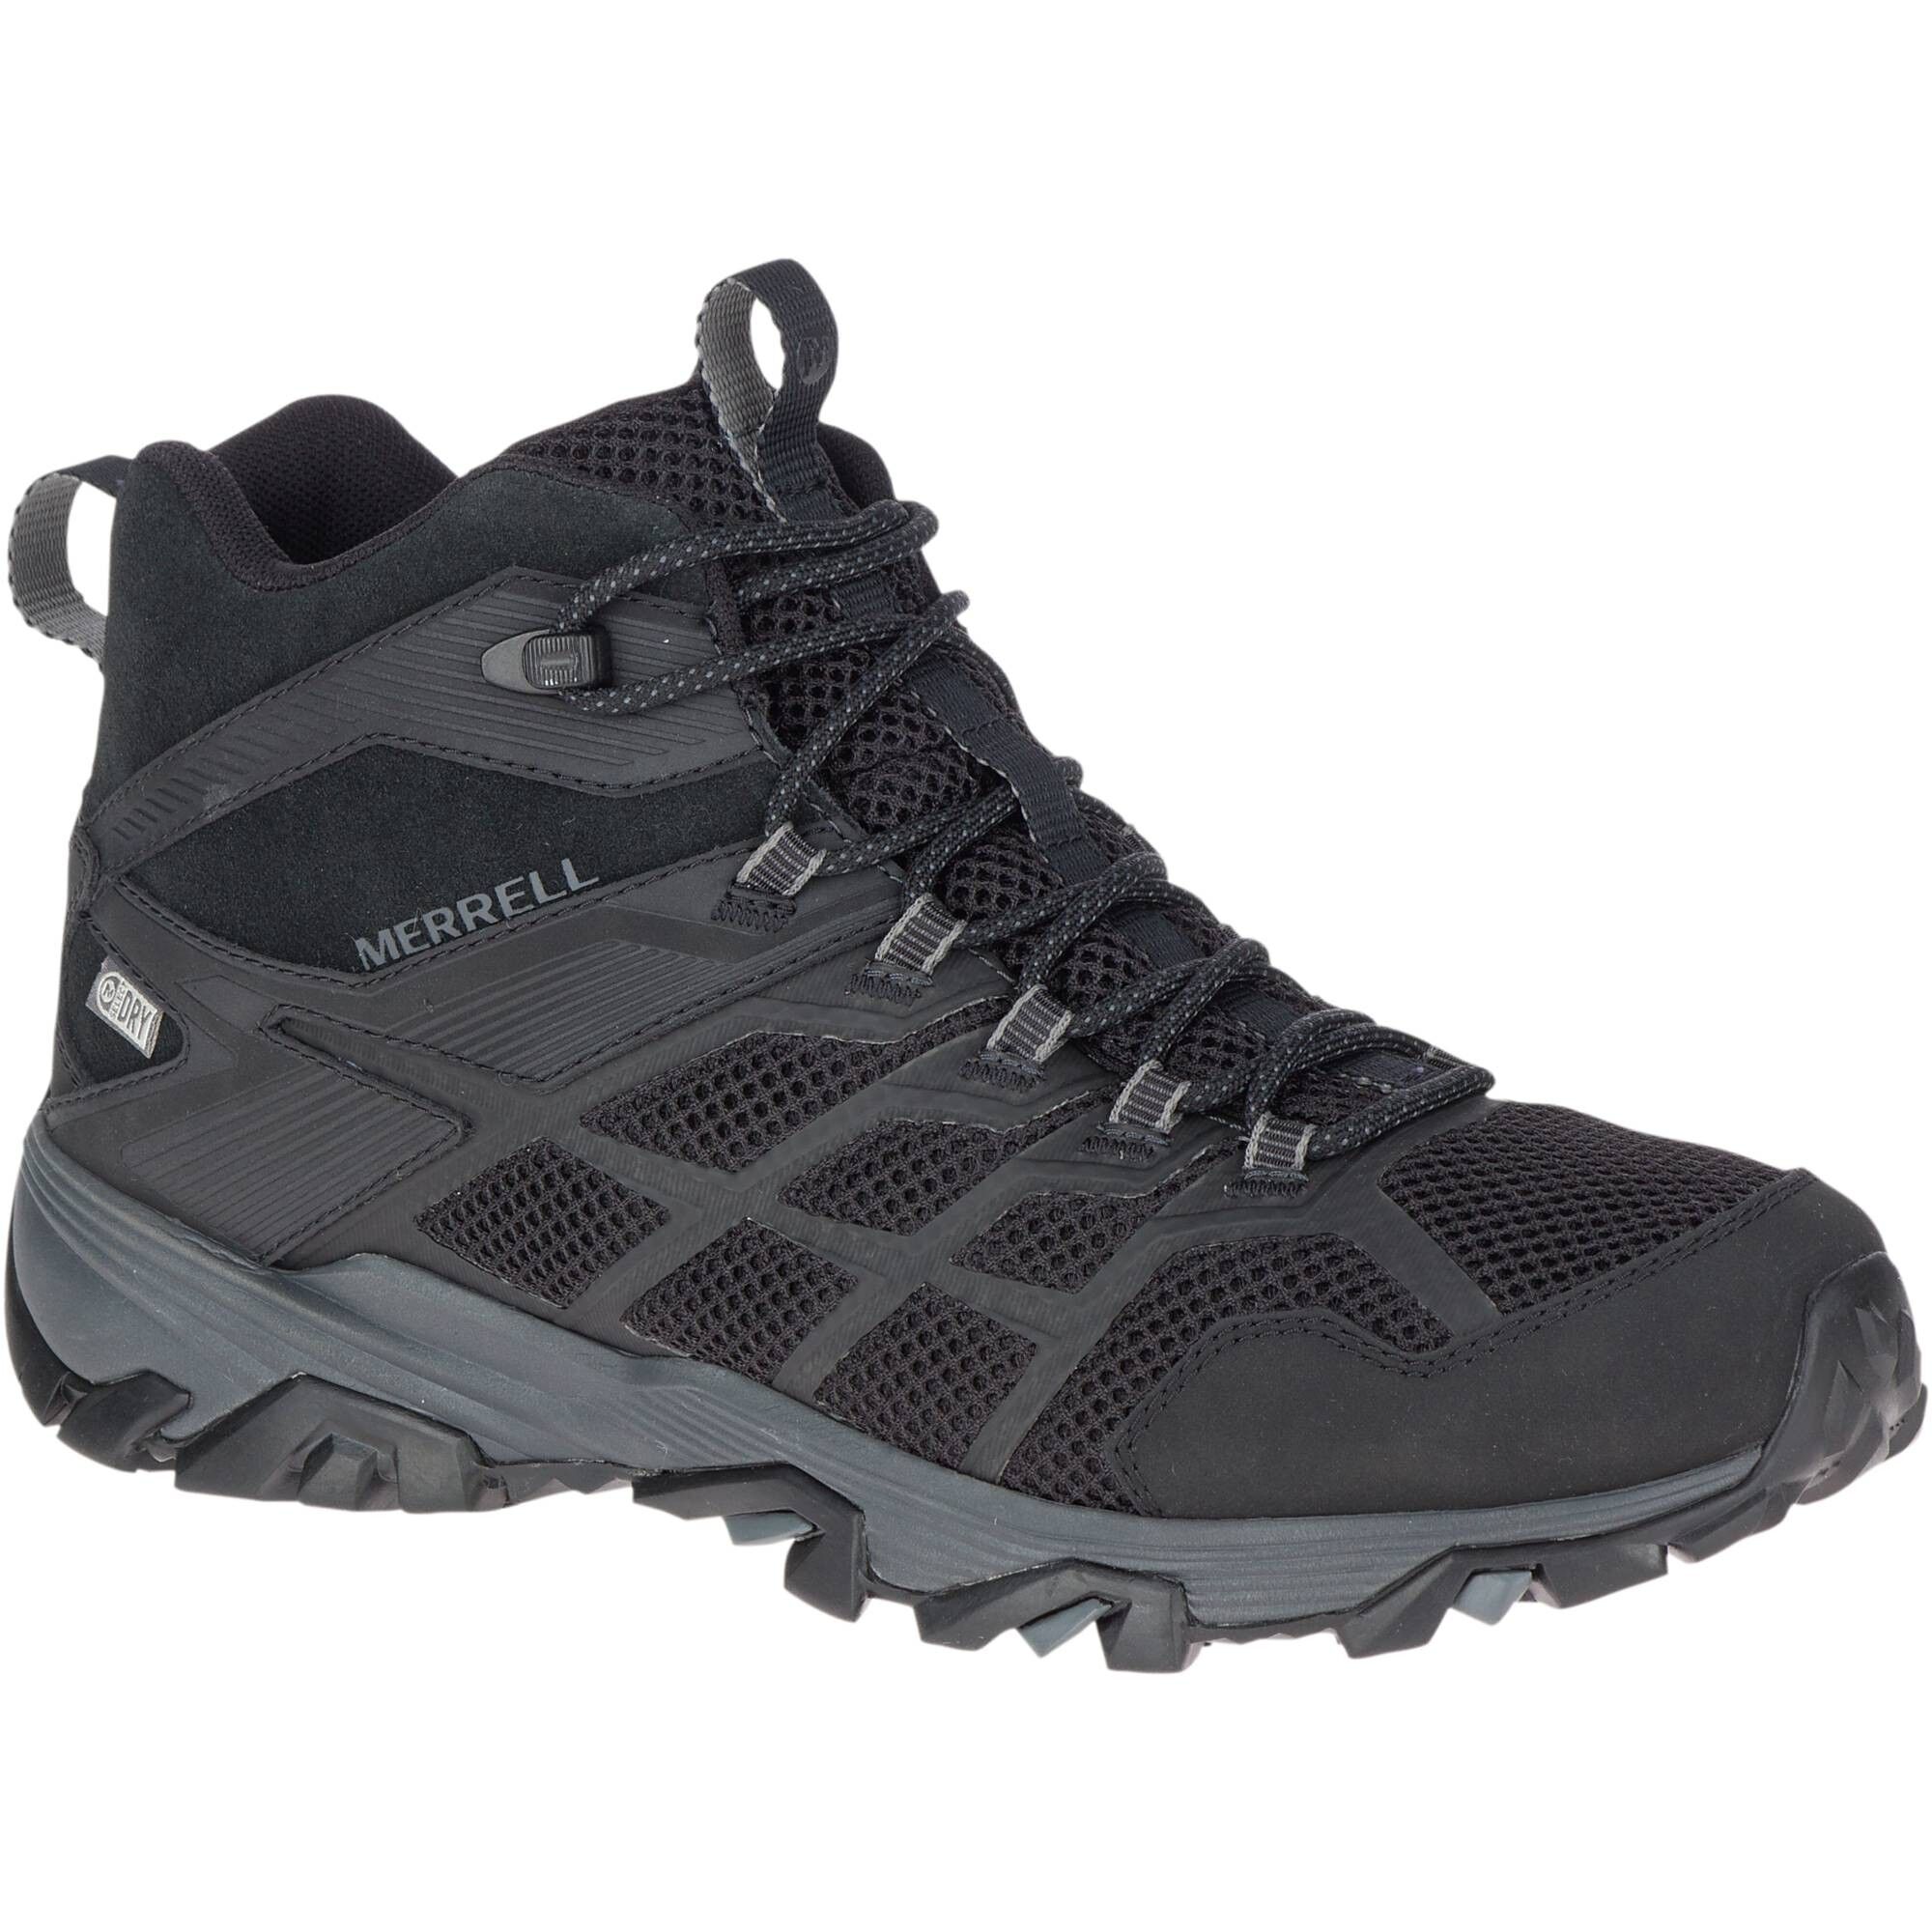 Merrell Moab Fst 2 Ice+ Thermo - Trekking boots - Men's